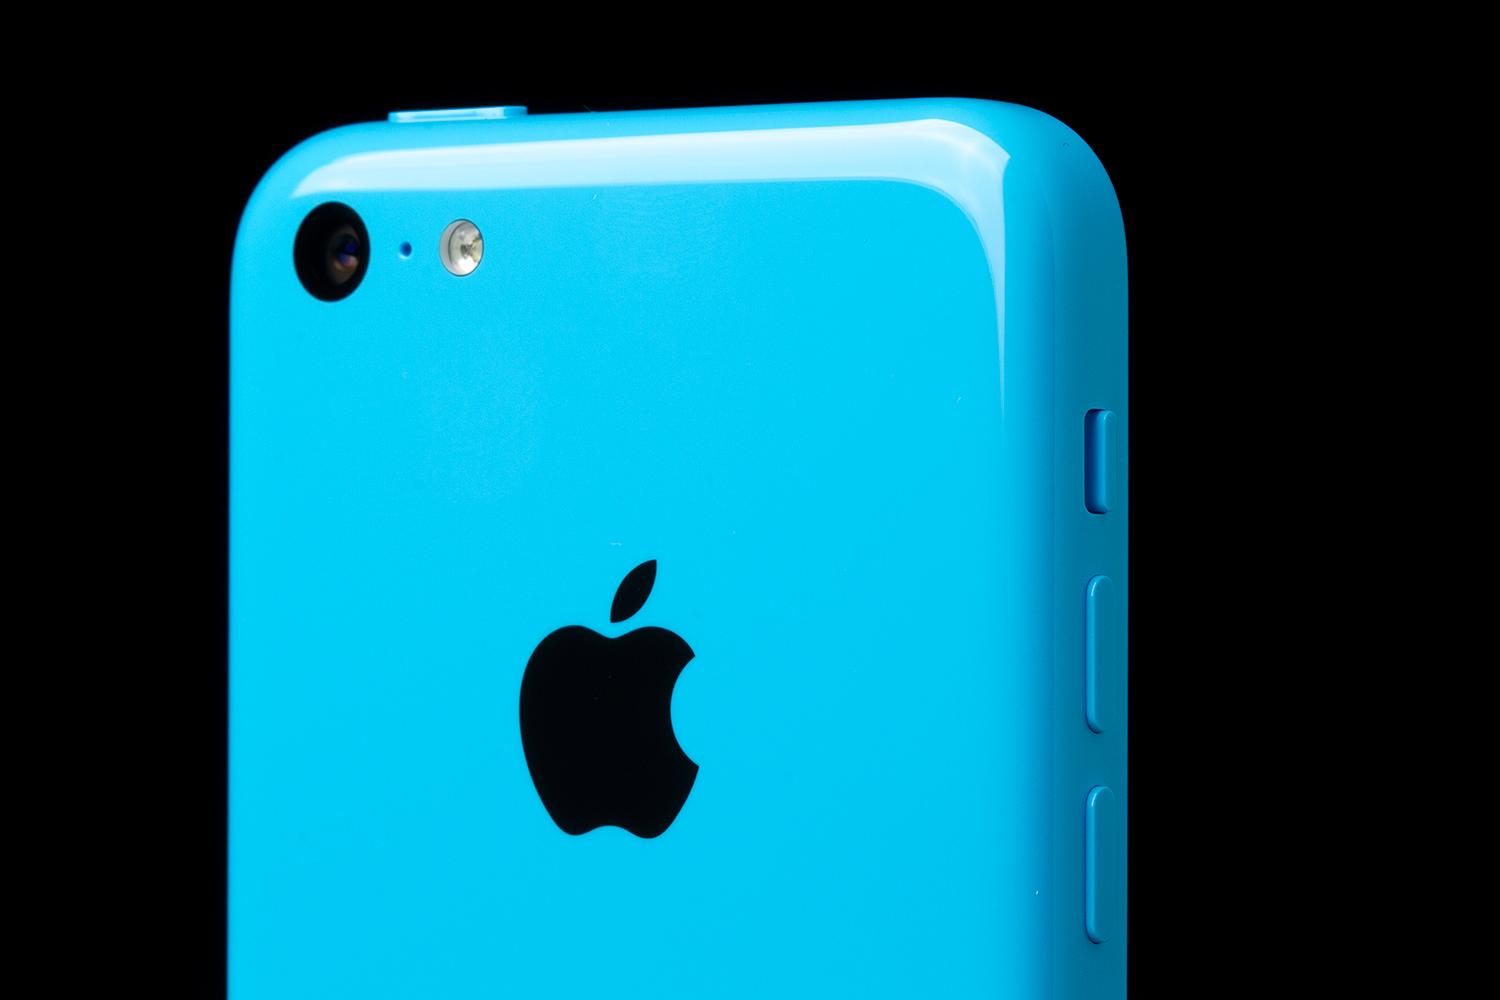 iphone 5c in blue